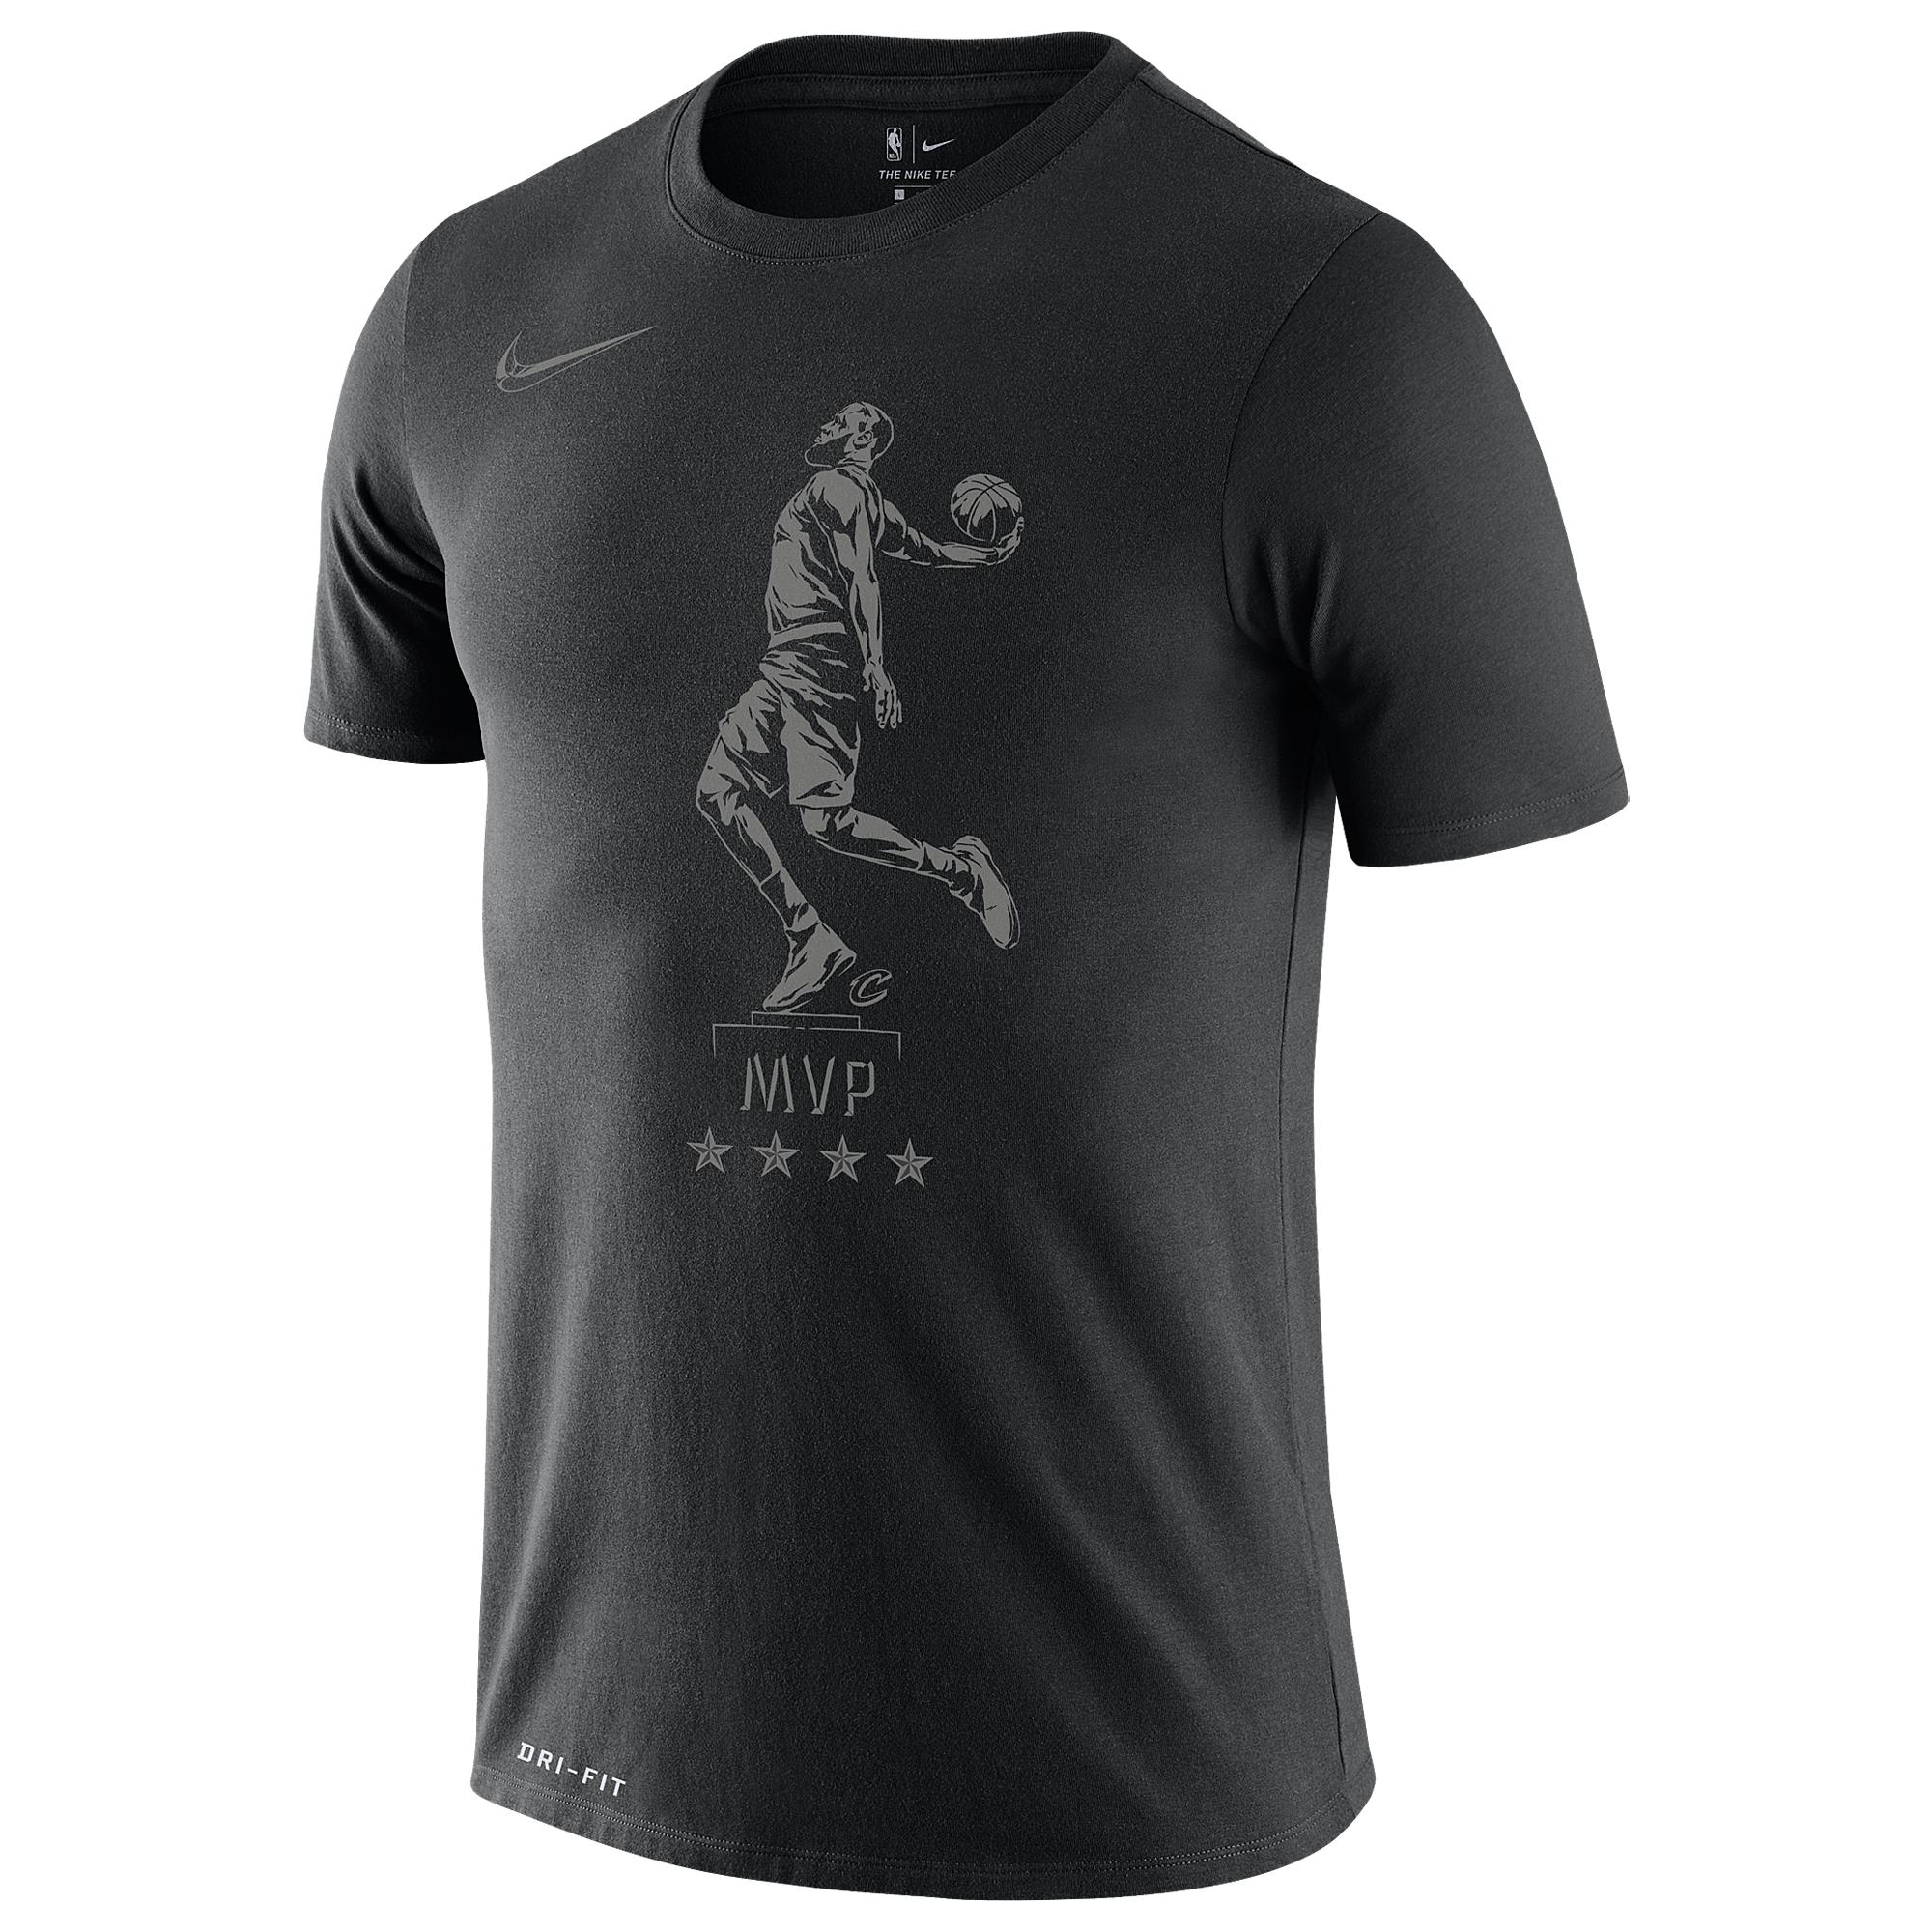 Nike Lebron James Nba Mvp Player Graphic T-shirt in Black for Men - Lyst